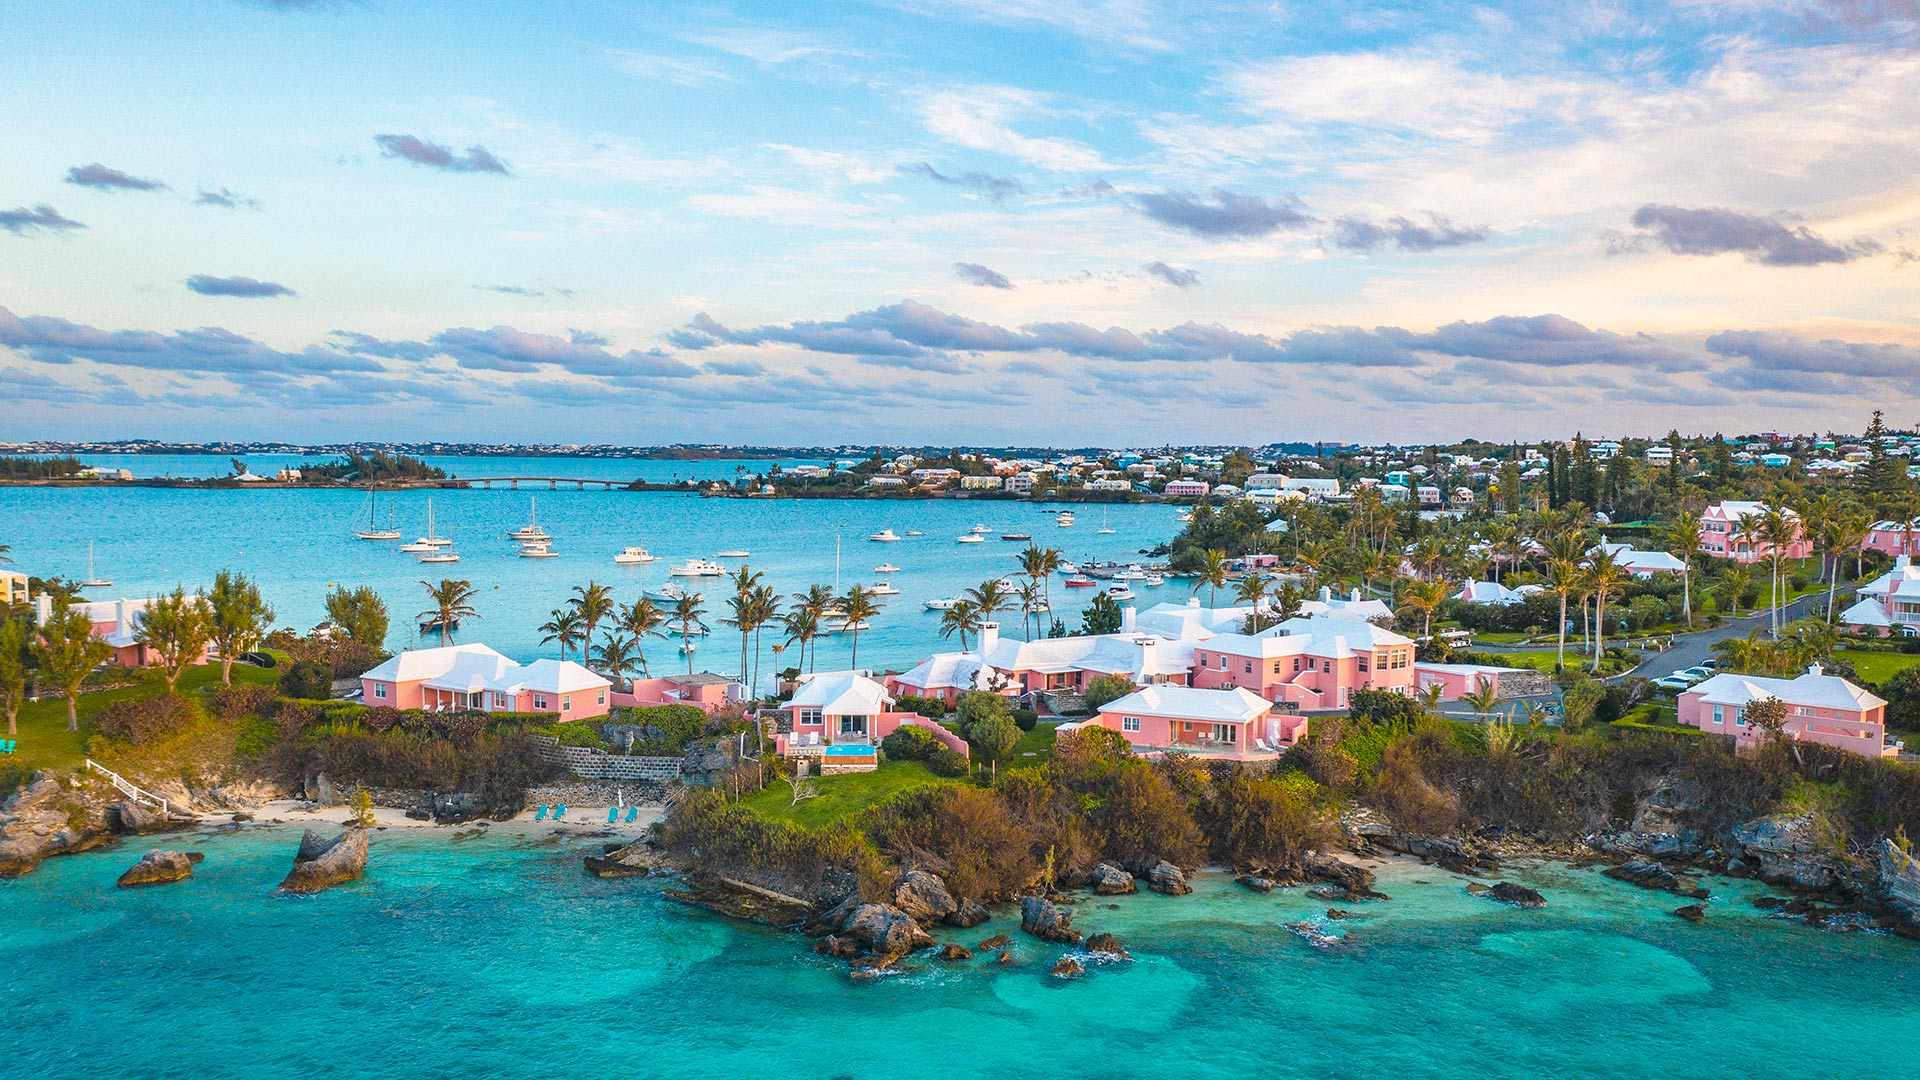 Pink houses along coast of Bermuda